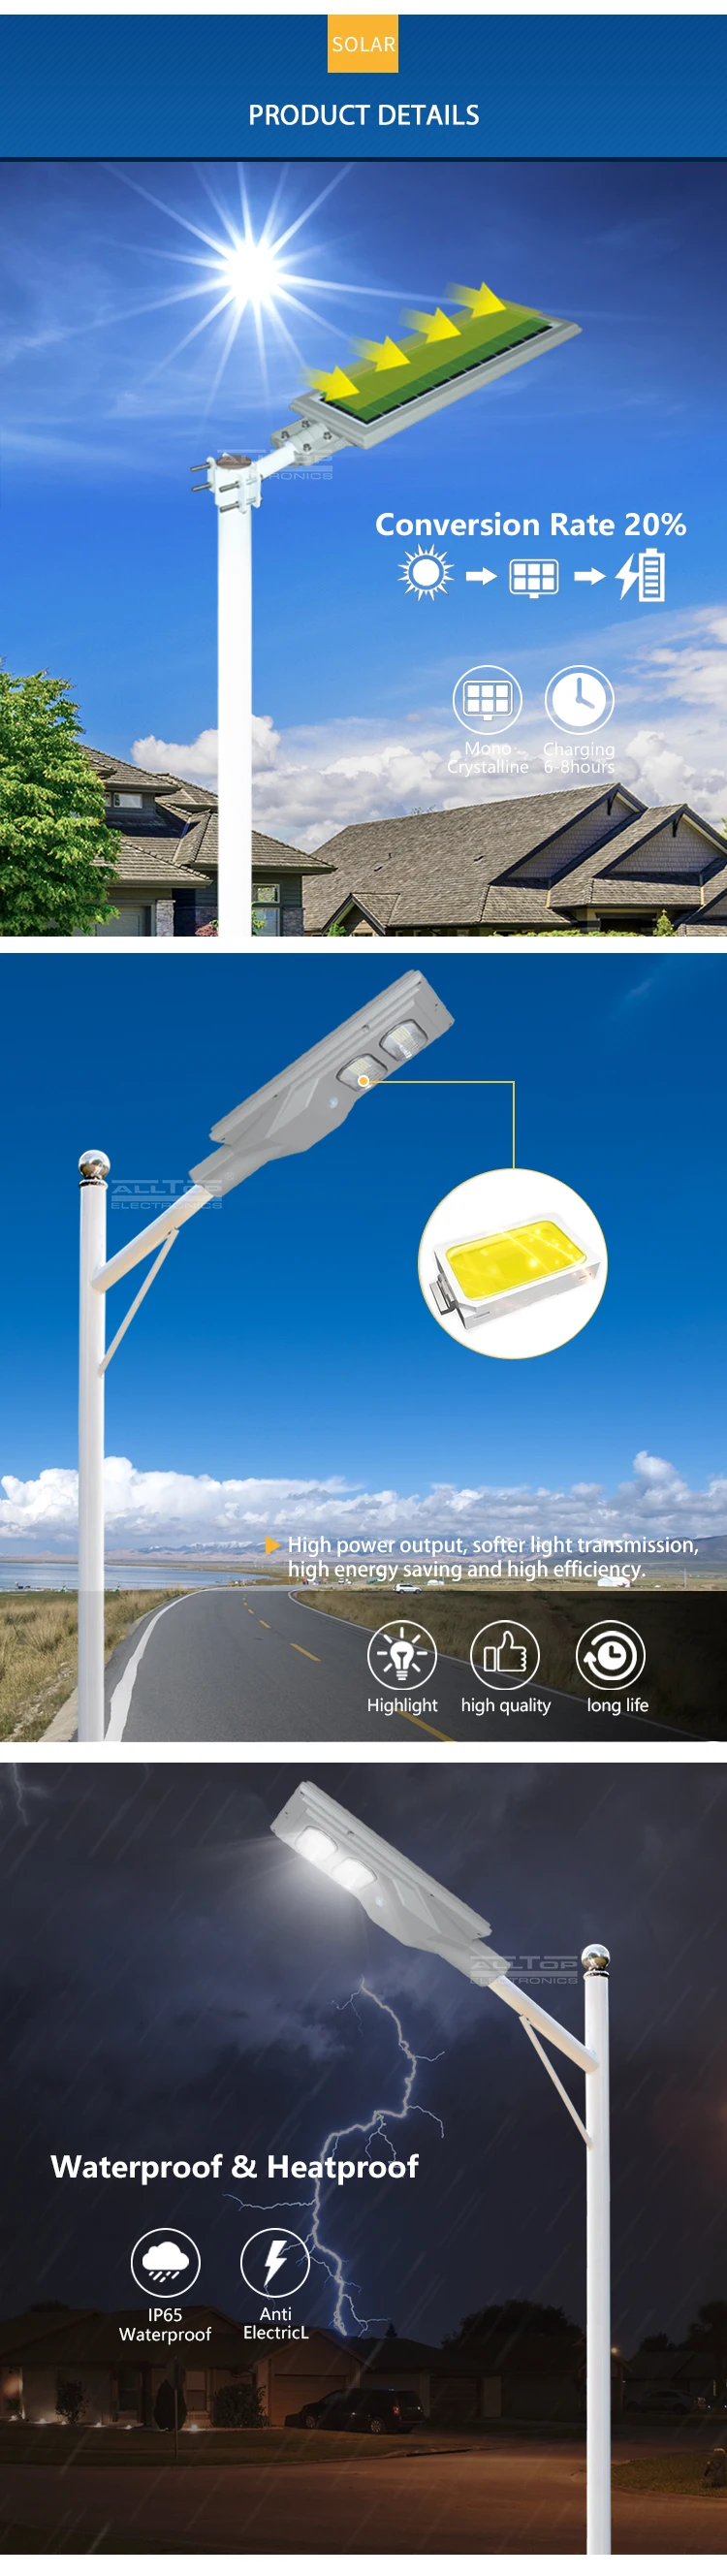 ALLTOP High quality ABS IP65 30w 60w 90w 120w 150w all in one led solar street lamp